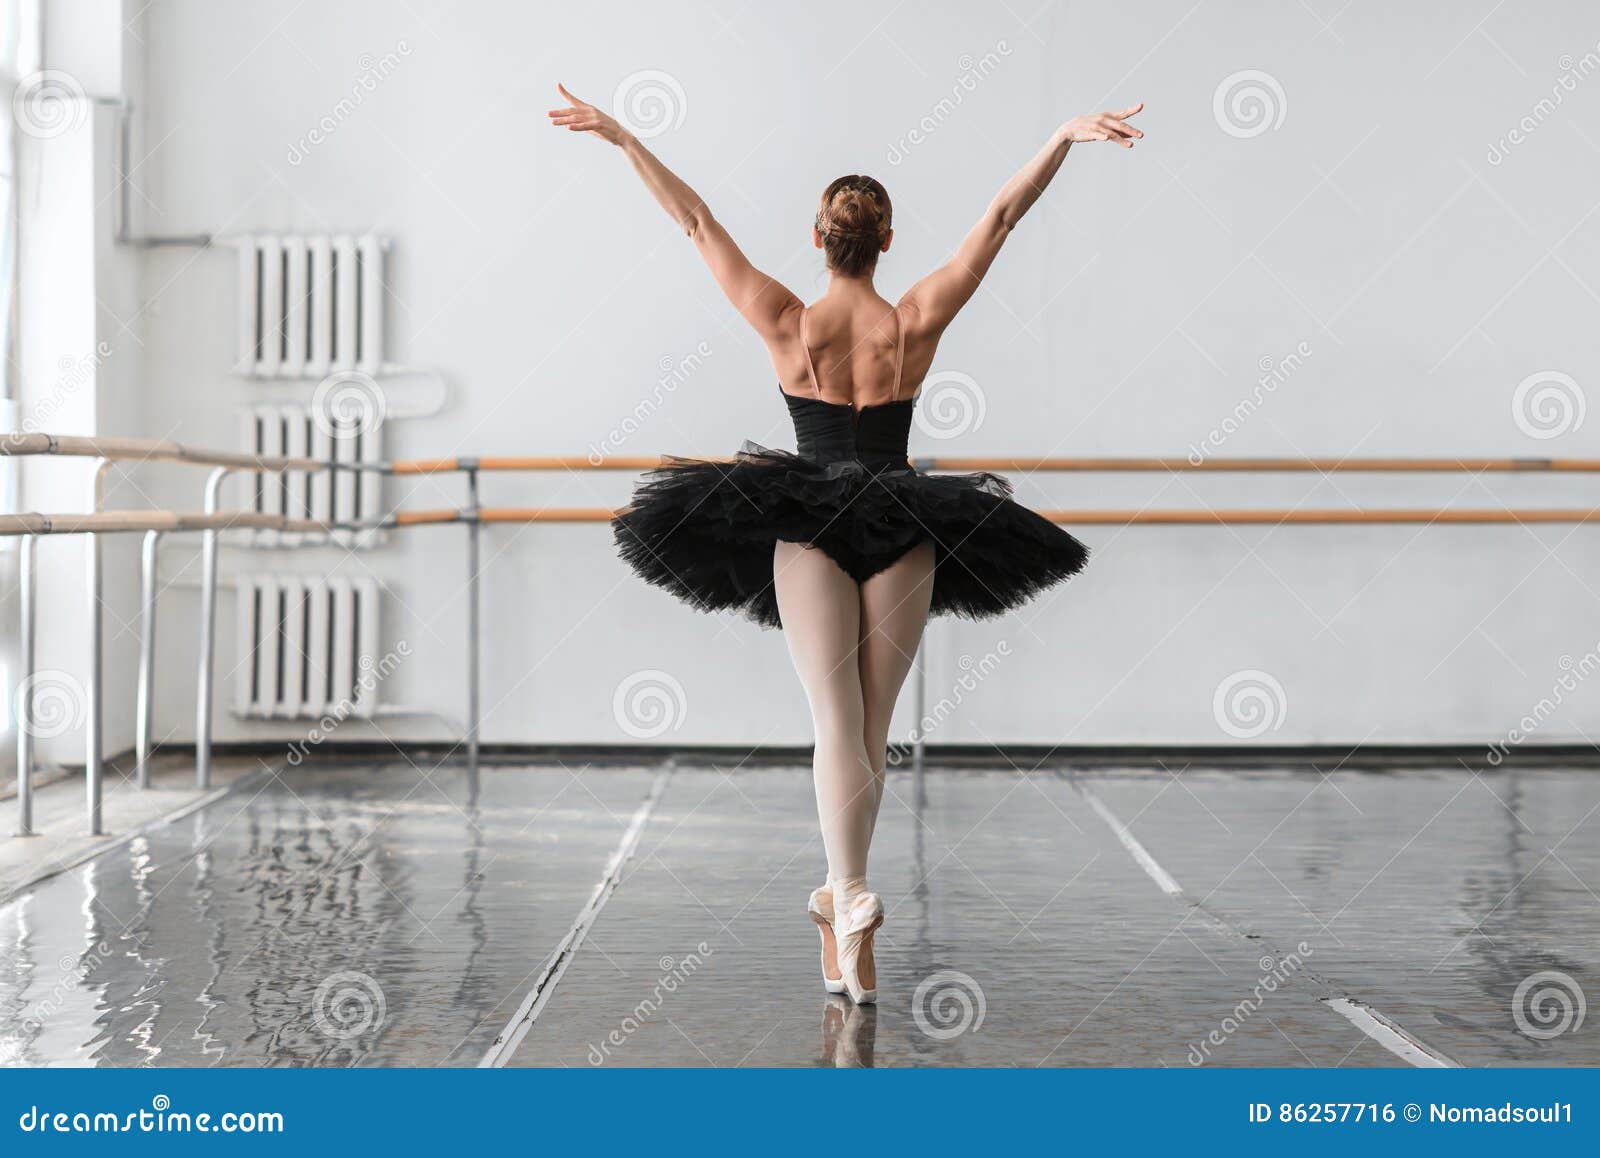 graceful ballerina dance in ballet class